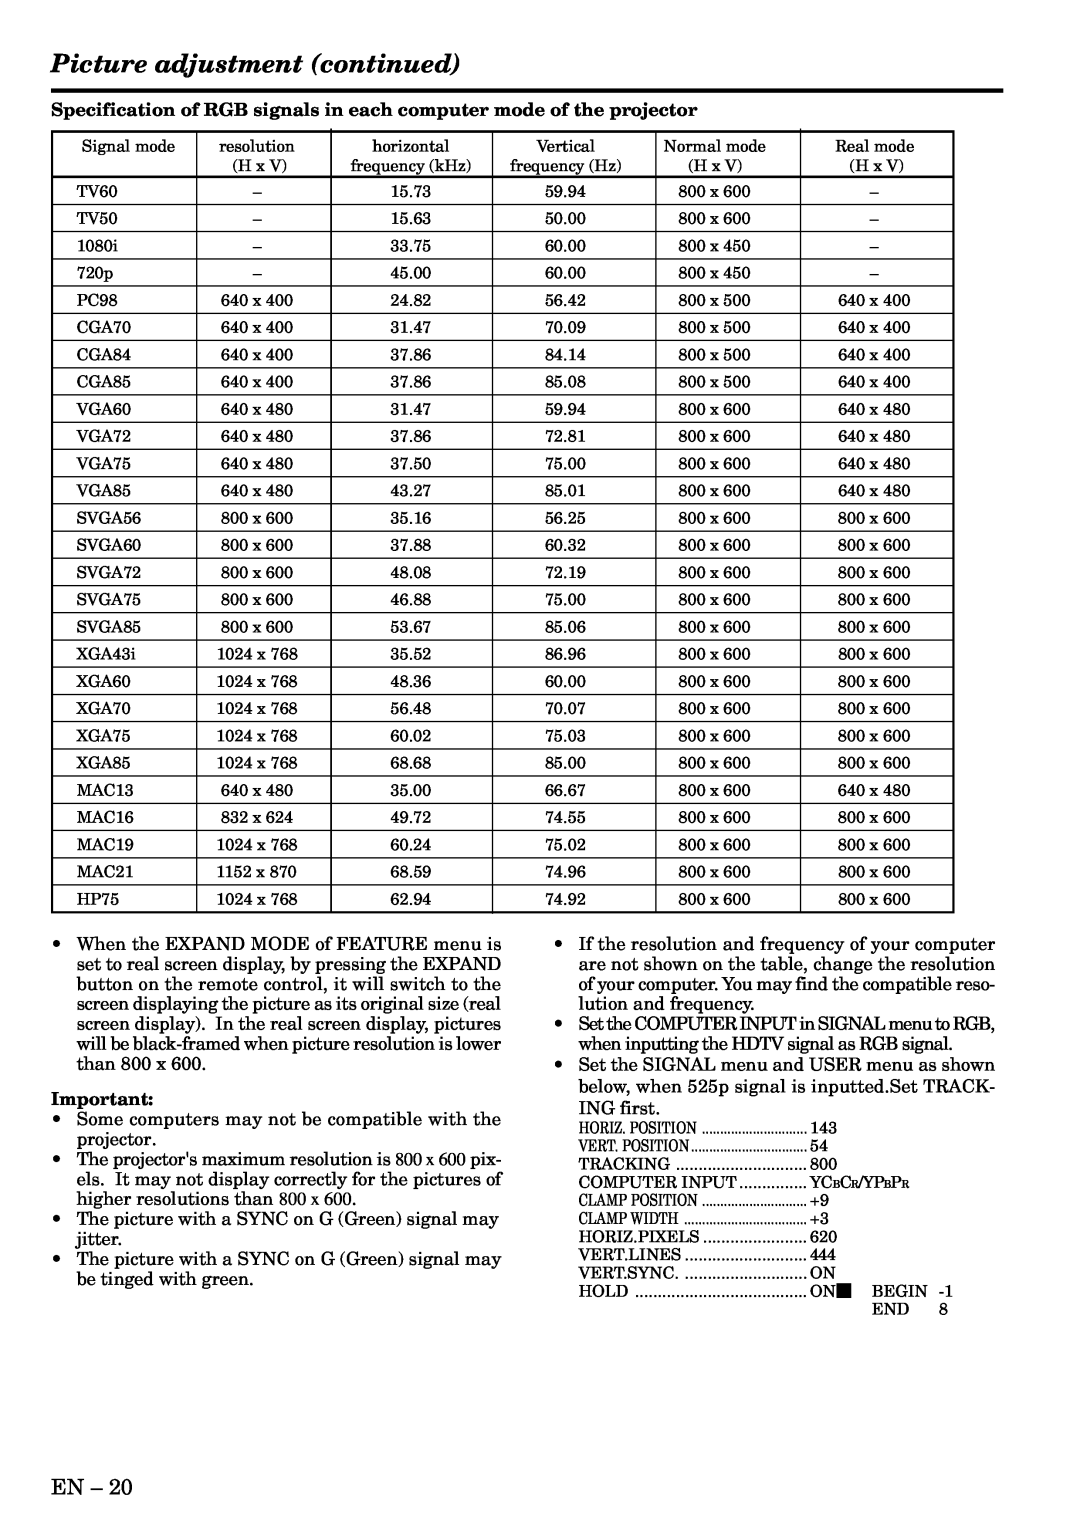 Mitsubishi Electronics LVP-SA51U user manual Picture adjustment continued 